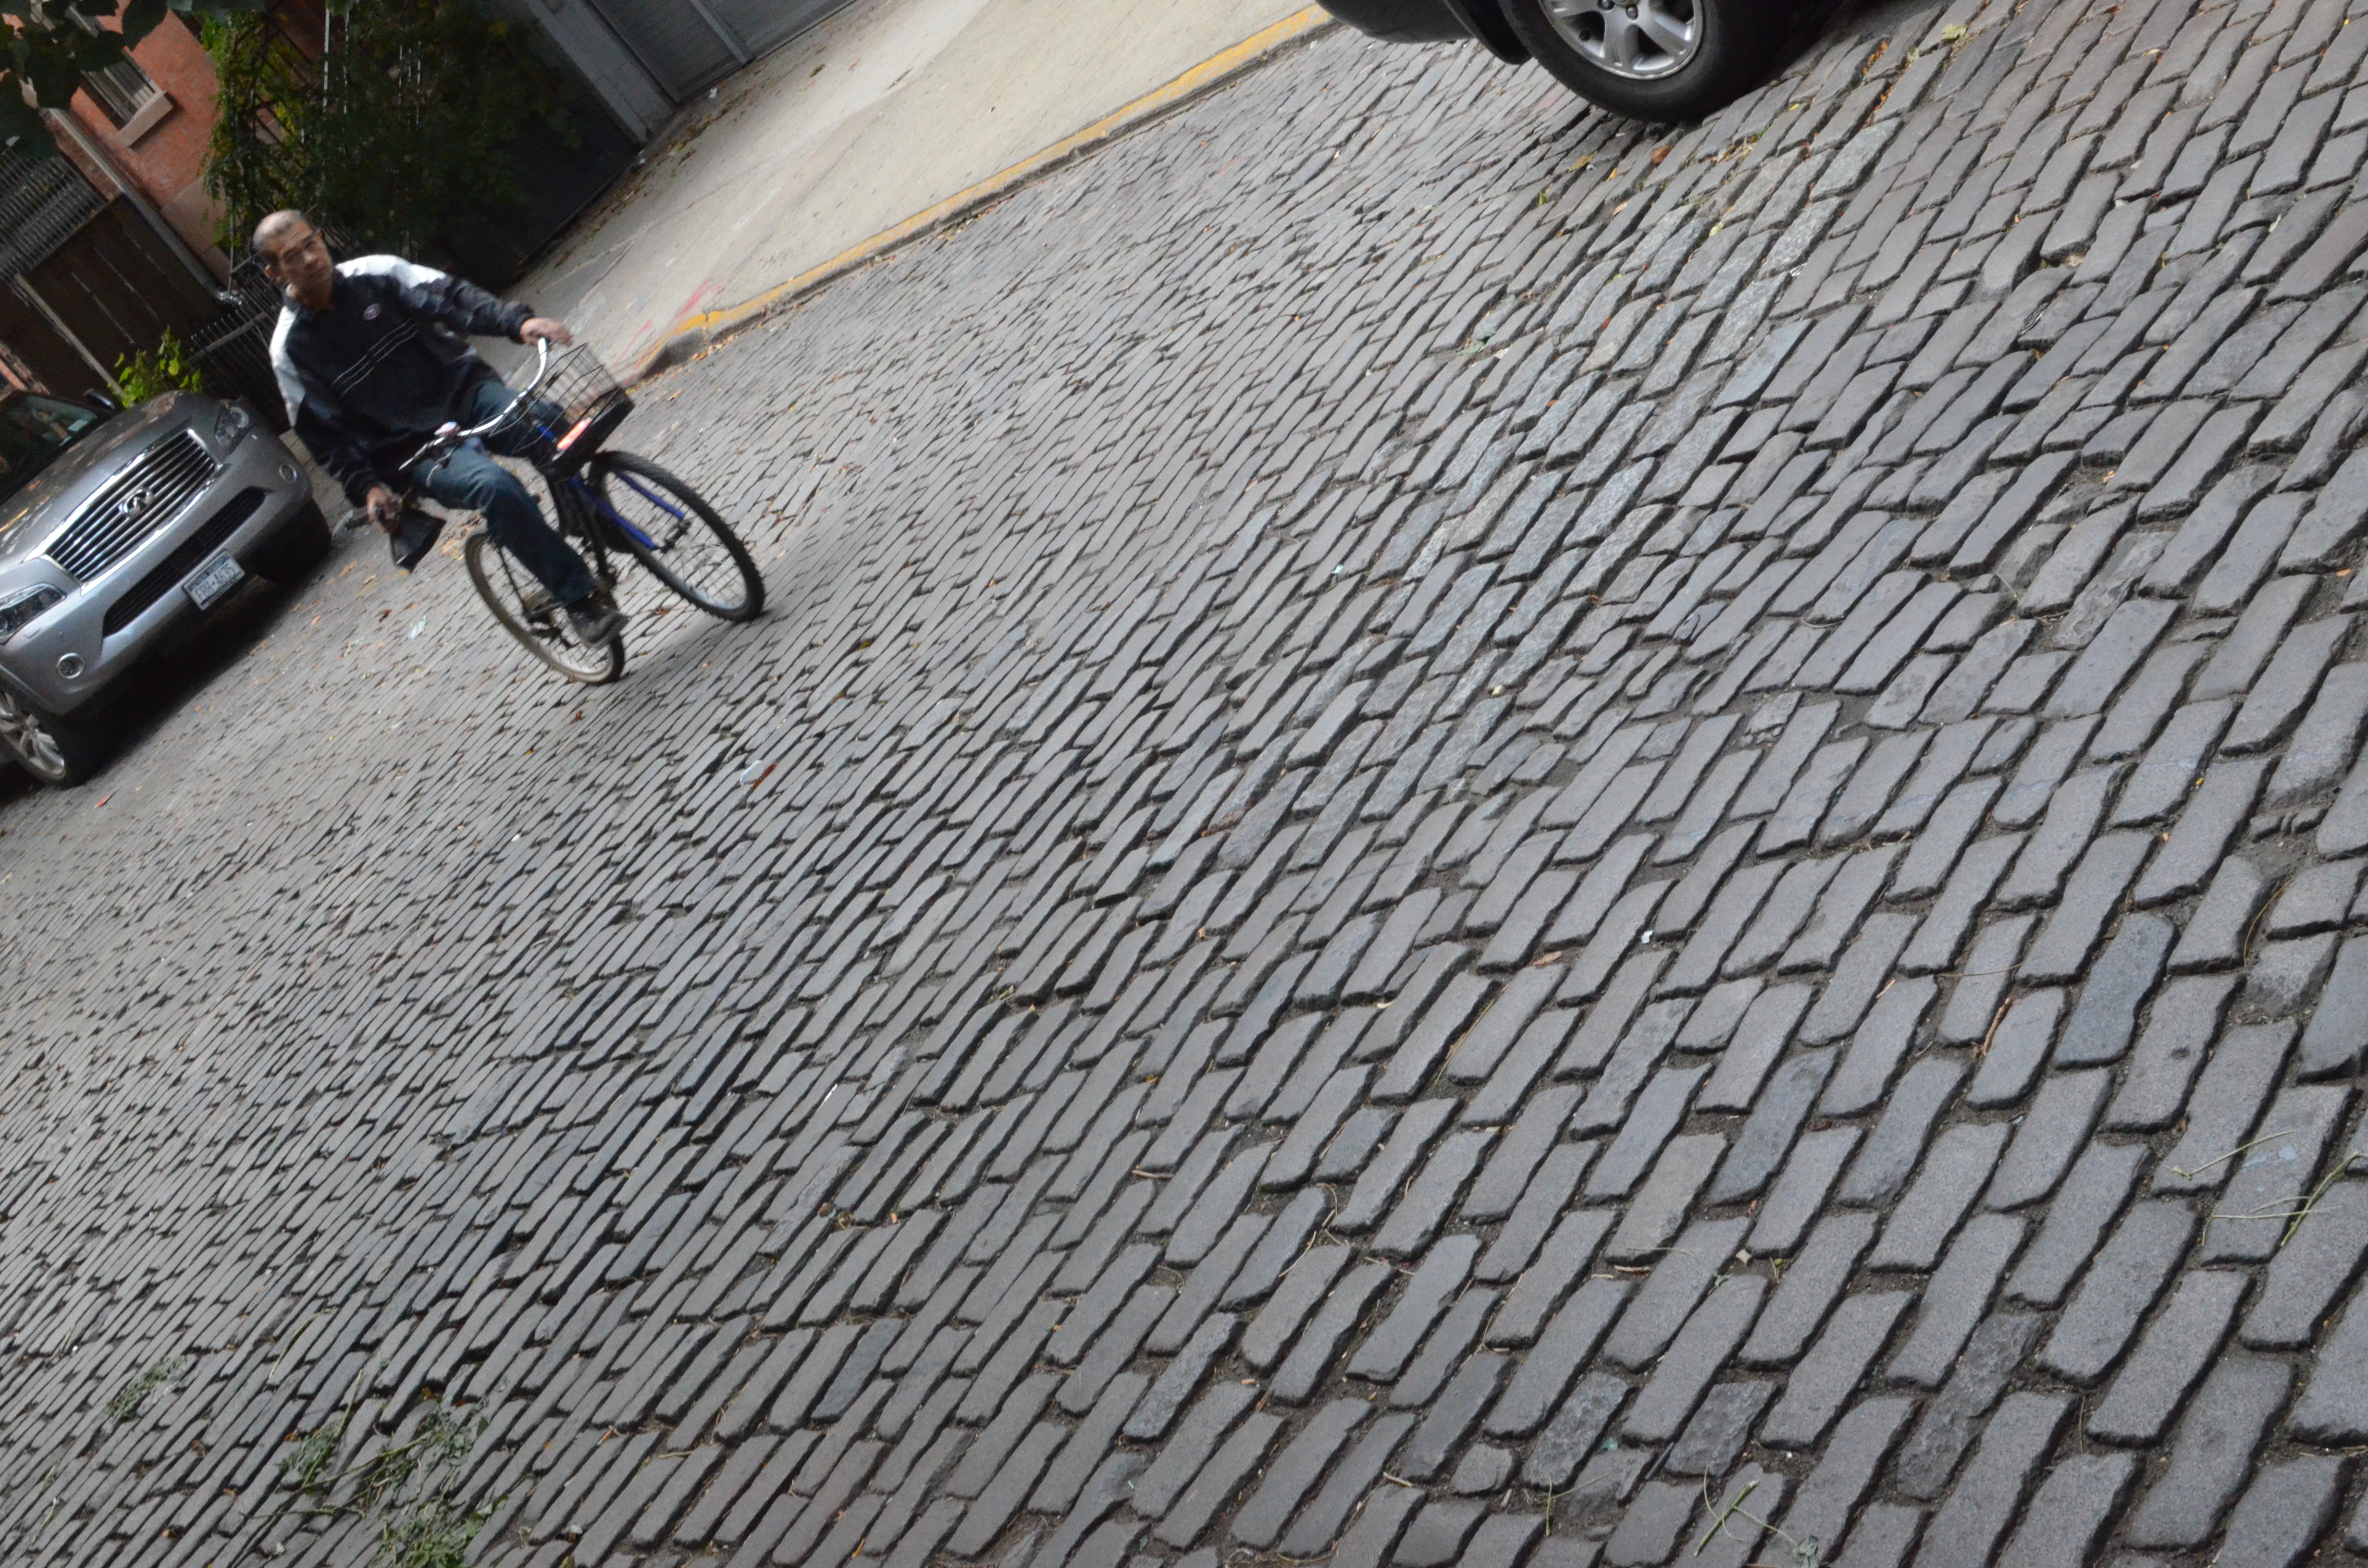 bicyclist on a cobblestone street